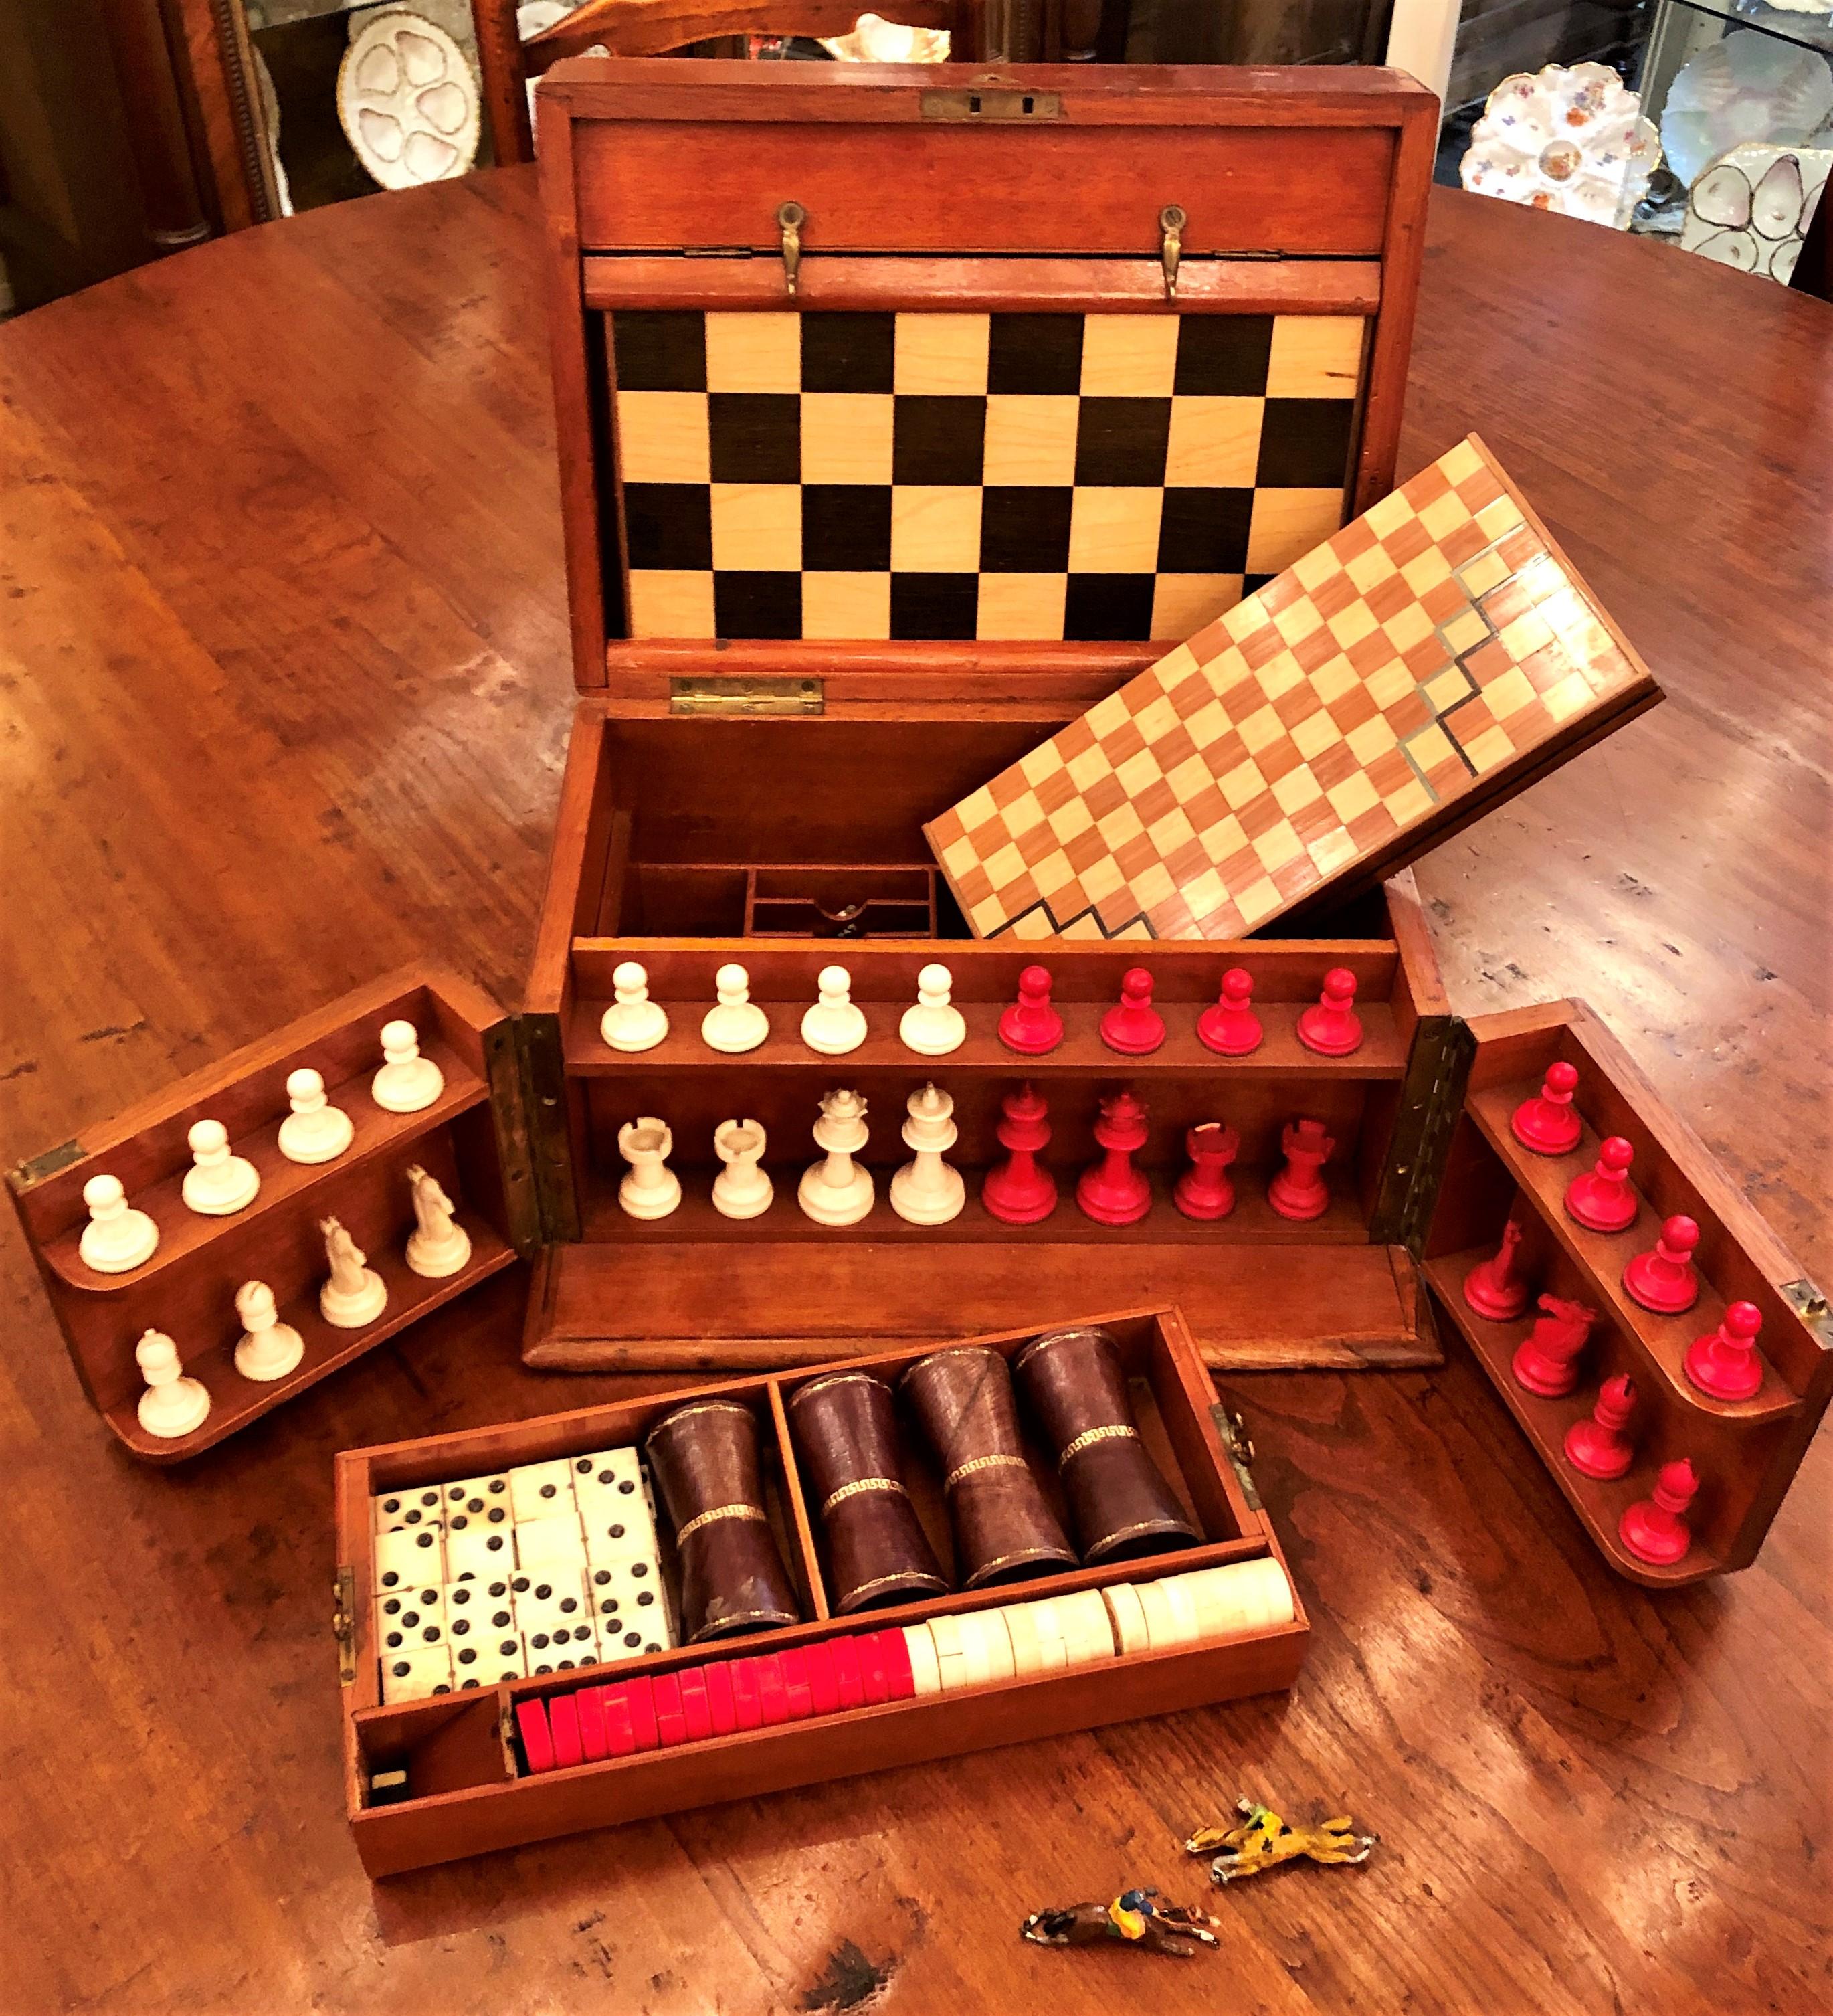 Antique English walnut games box compendium with all original games, circa 1890-1900.